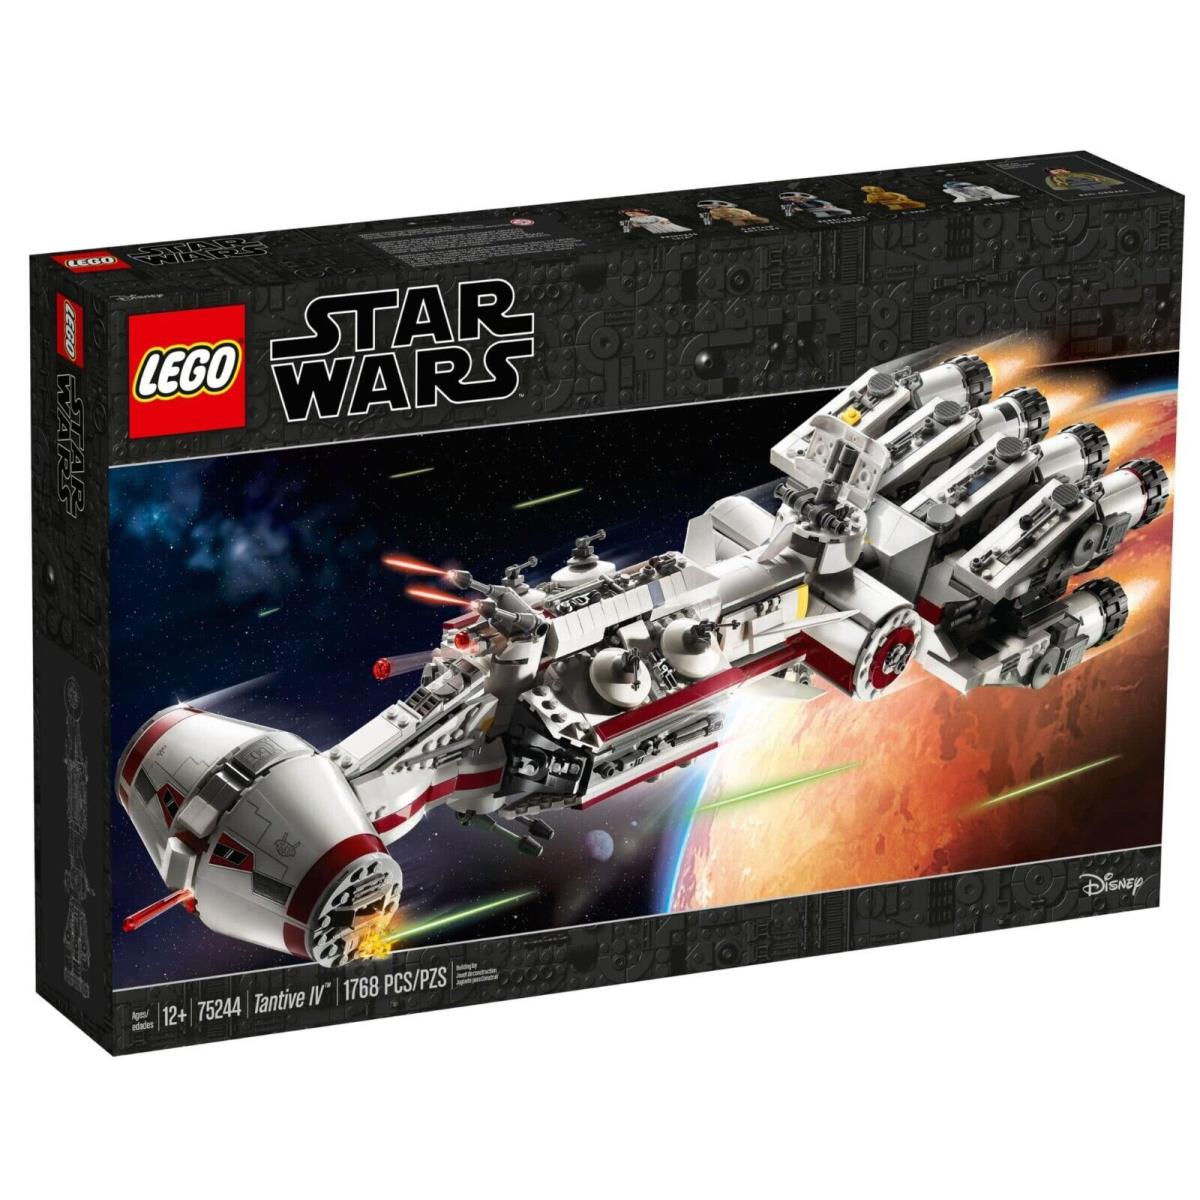 Lego Star Wars: Tantive IV 75244 - - - Retired